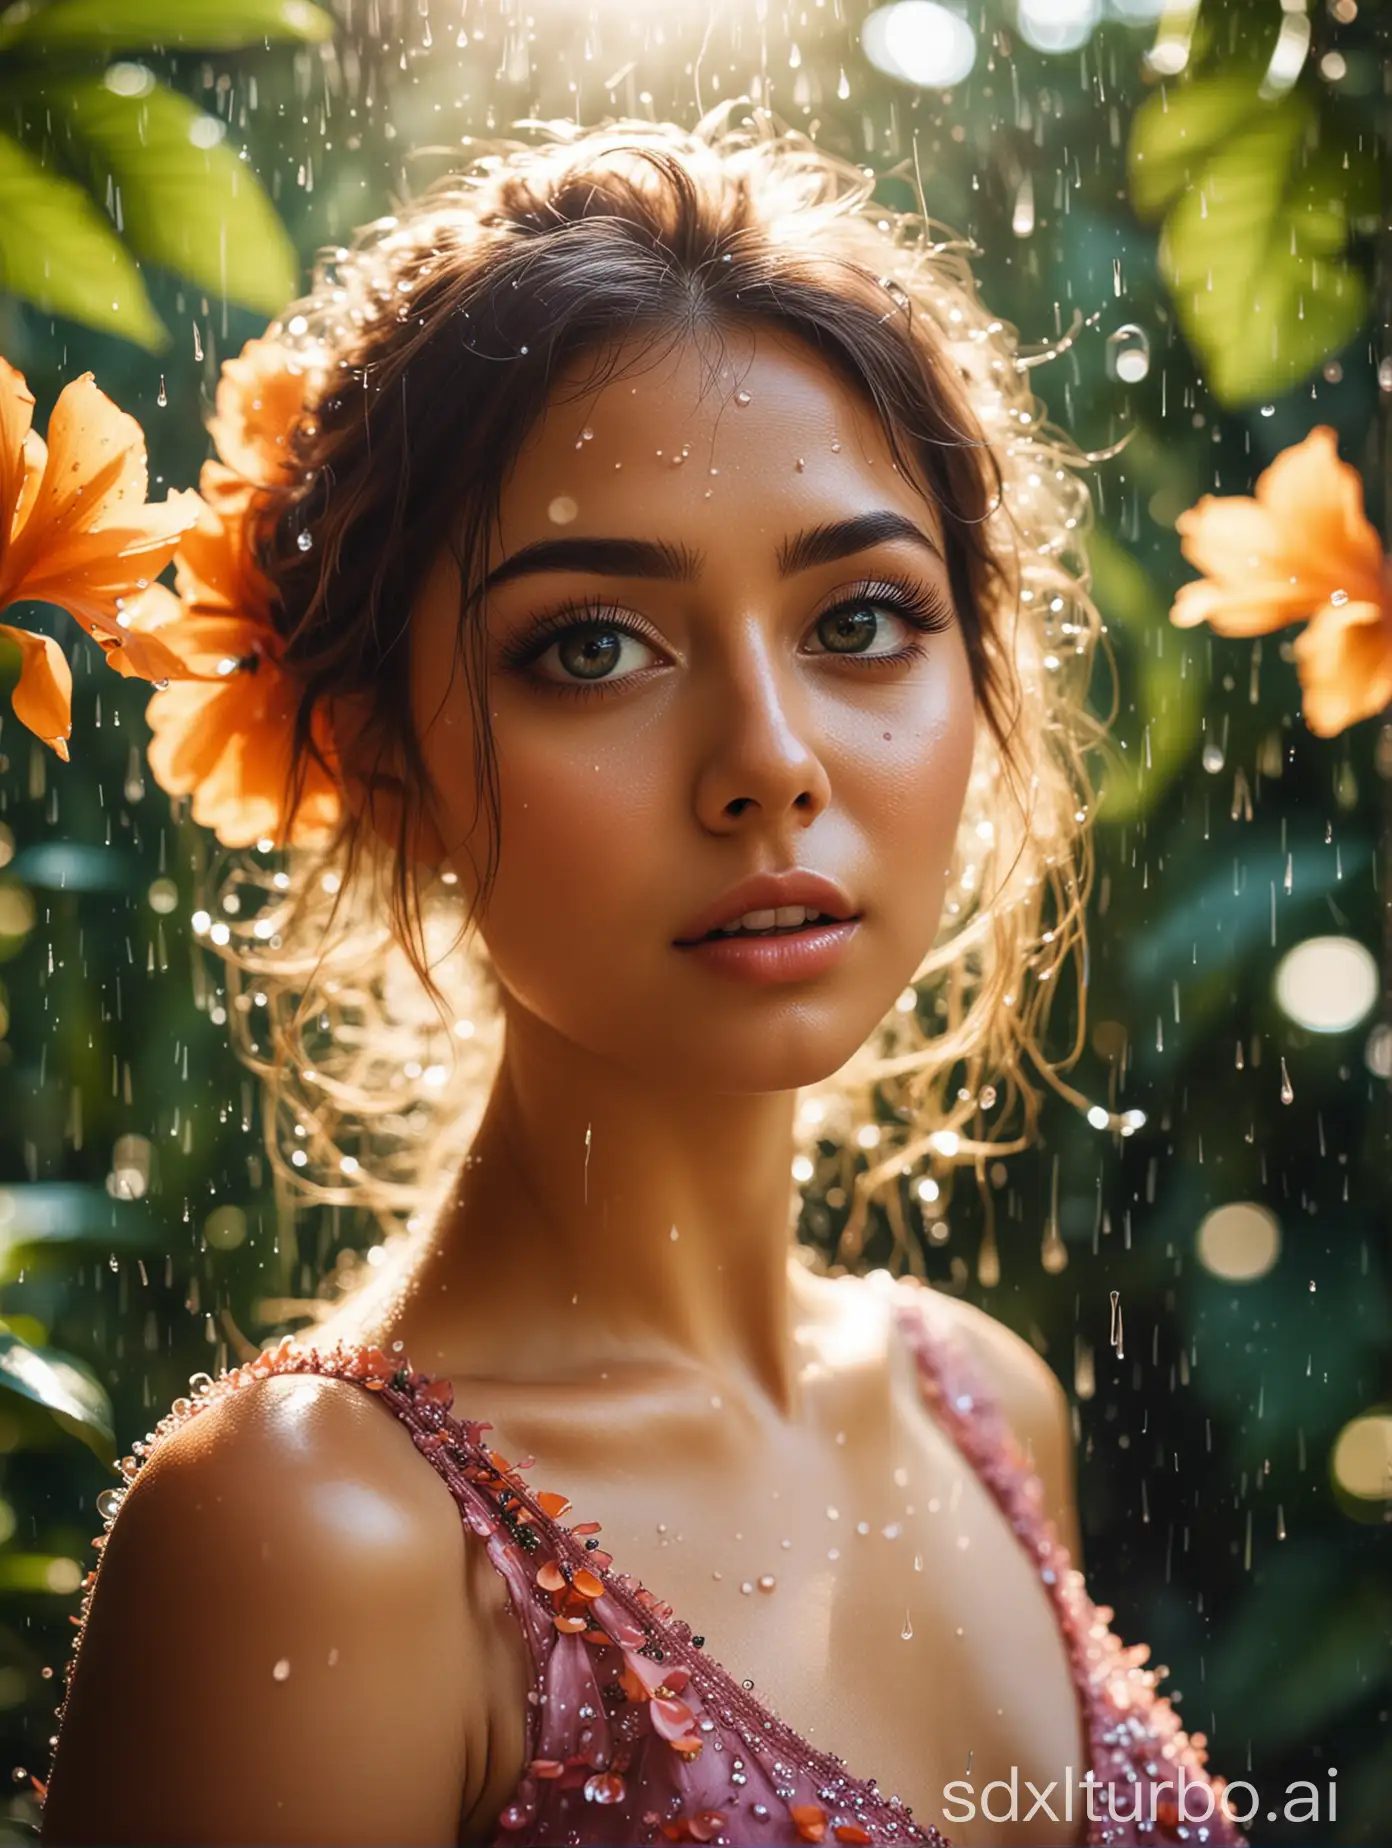 Water droplets on tropical flowers, beautiful girl, dress, dance of glowing petals, big eyes, lush eyelashes, 128k, aesthetically pleasing, beautiful, bright lighting